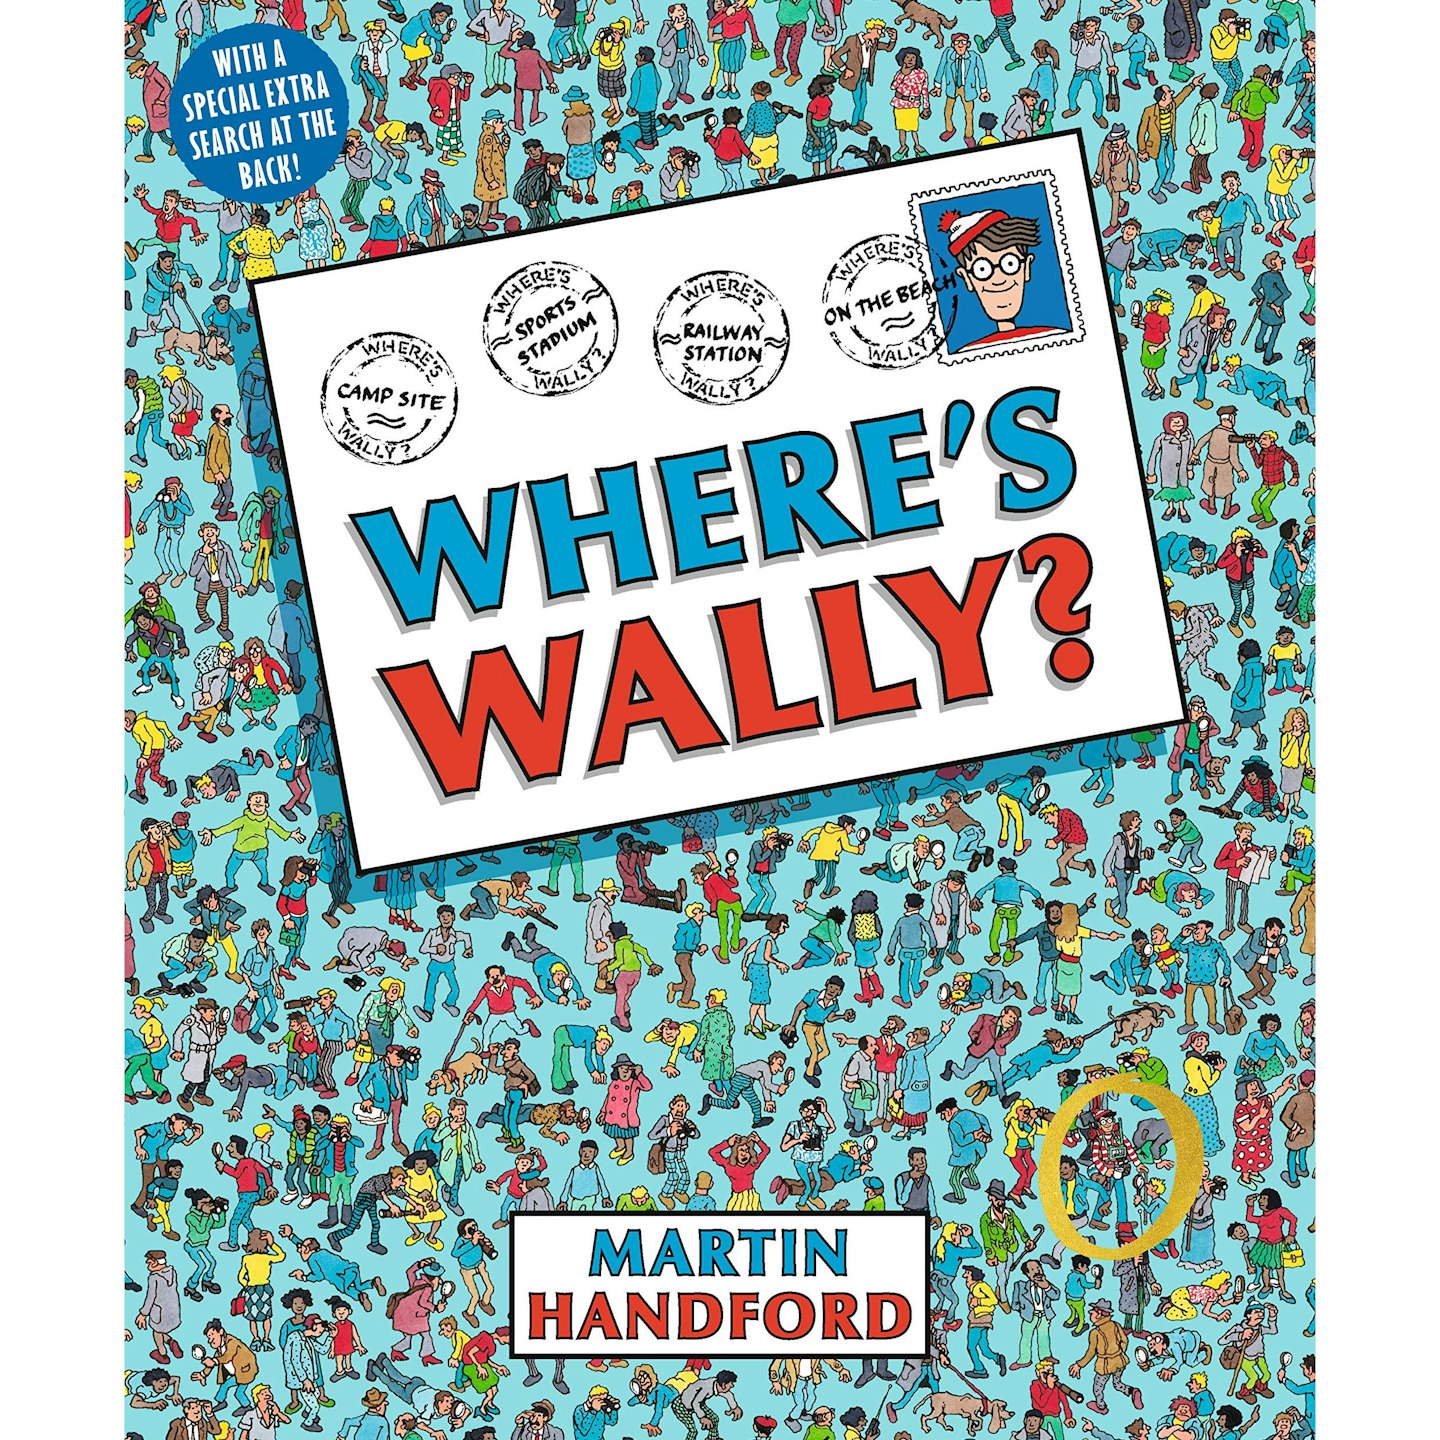 Whereu2019s Wally